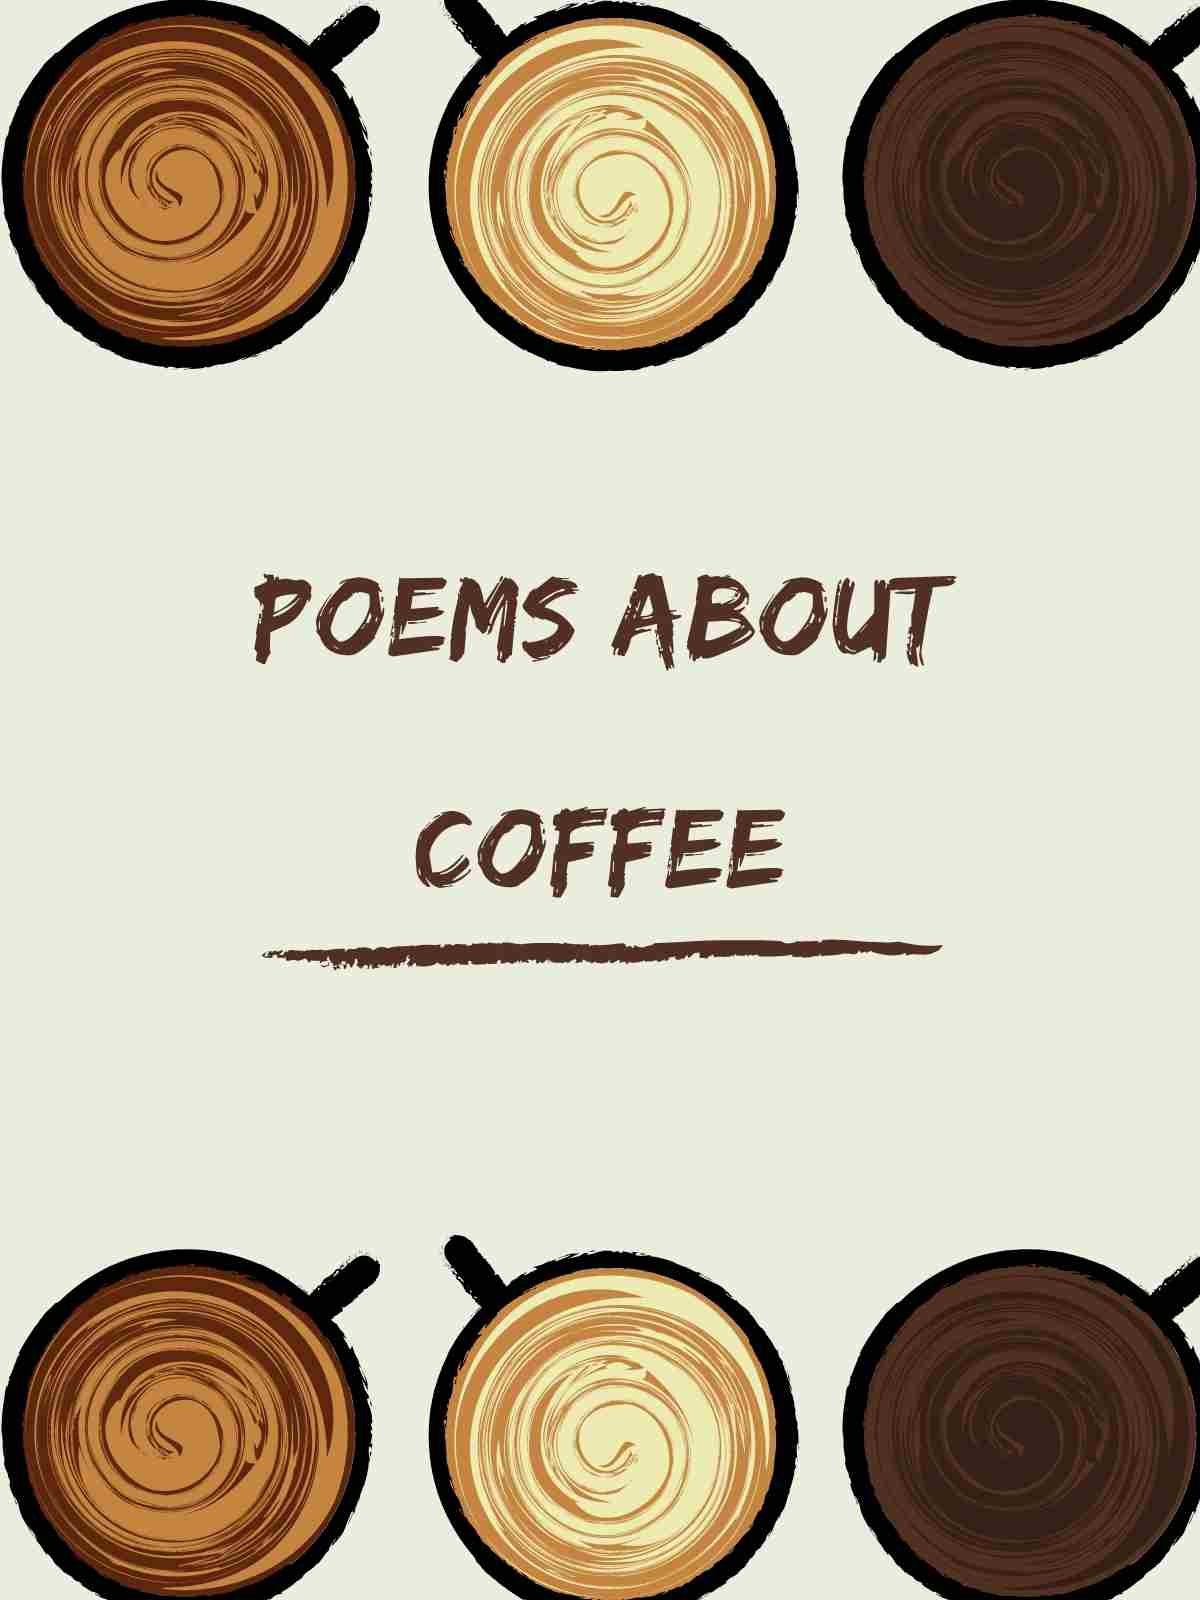 Coffee poetry that rhymes 